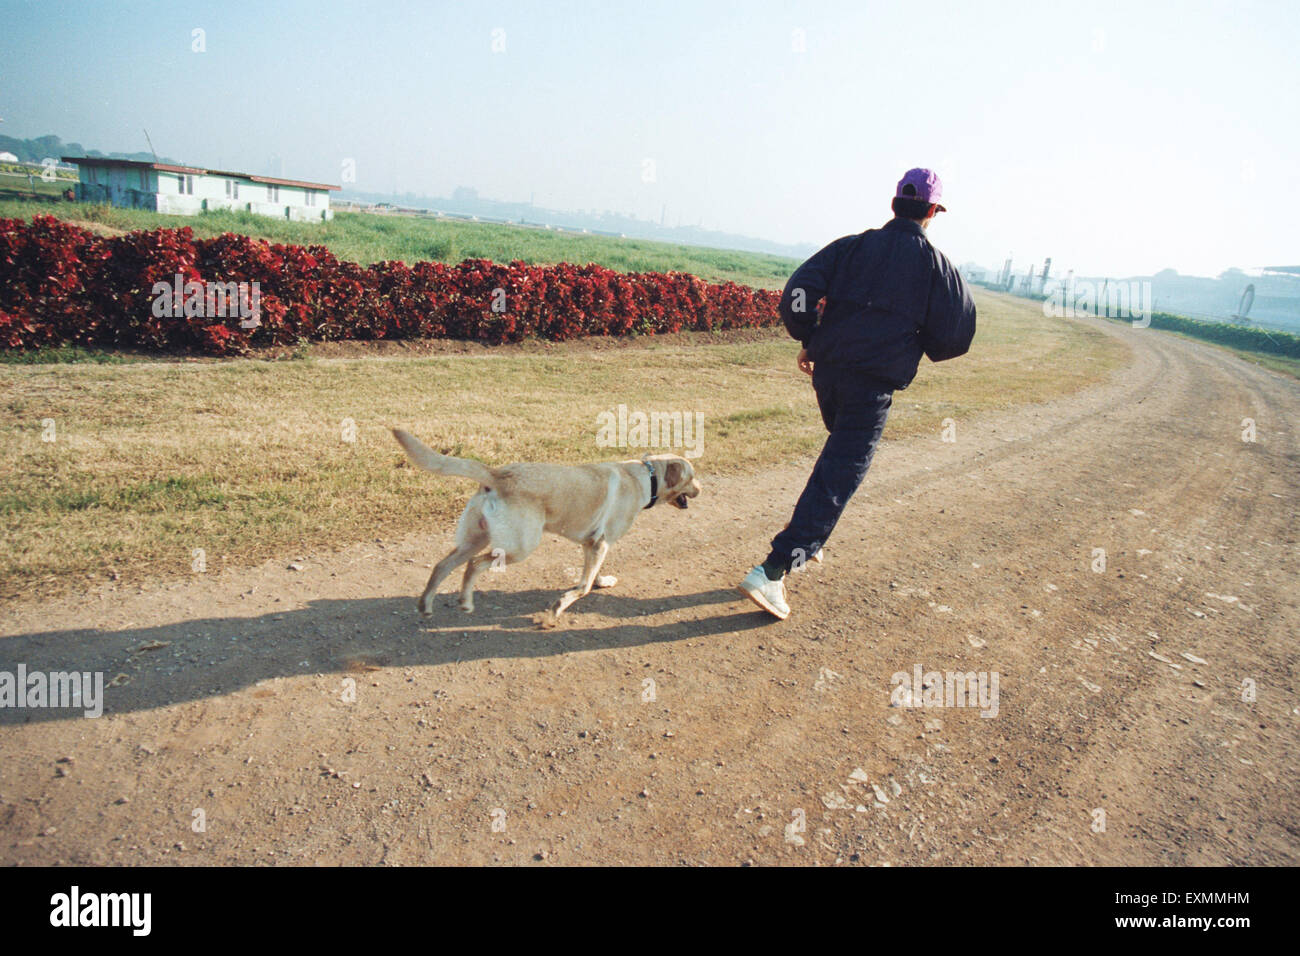 Pesi Shroff is a former Indian champion jockey, jogging with dog at mahalaxmi race course mumbai india Stock Photo